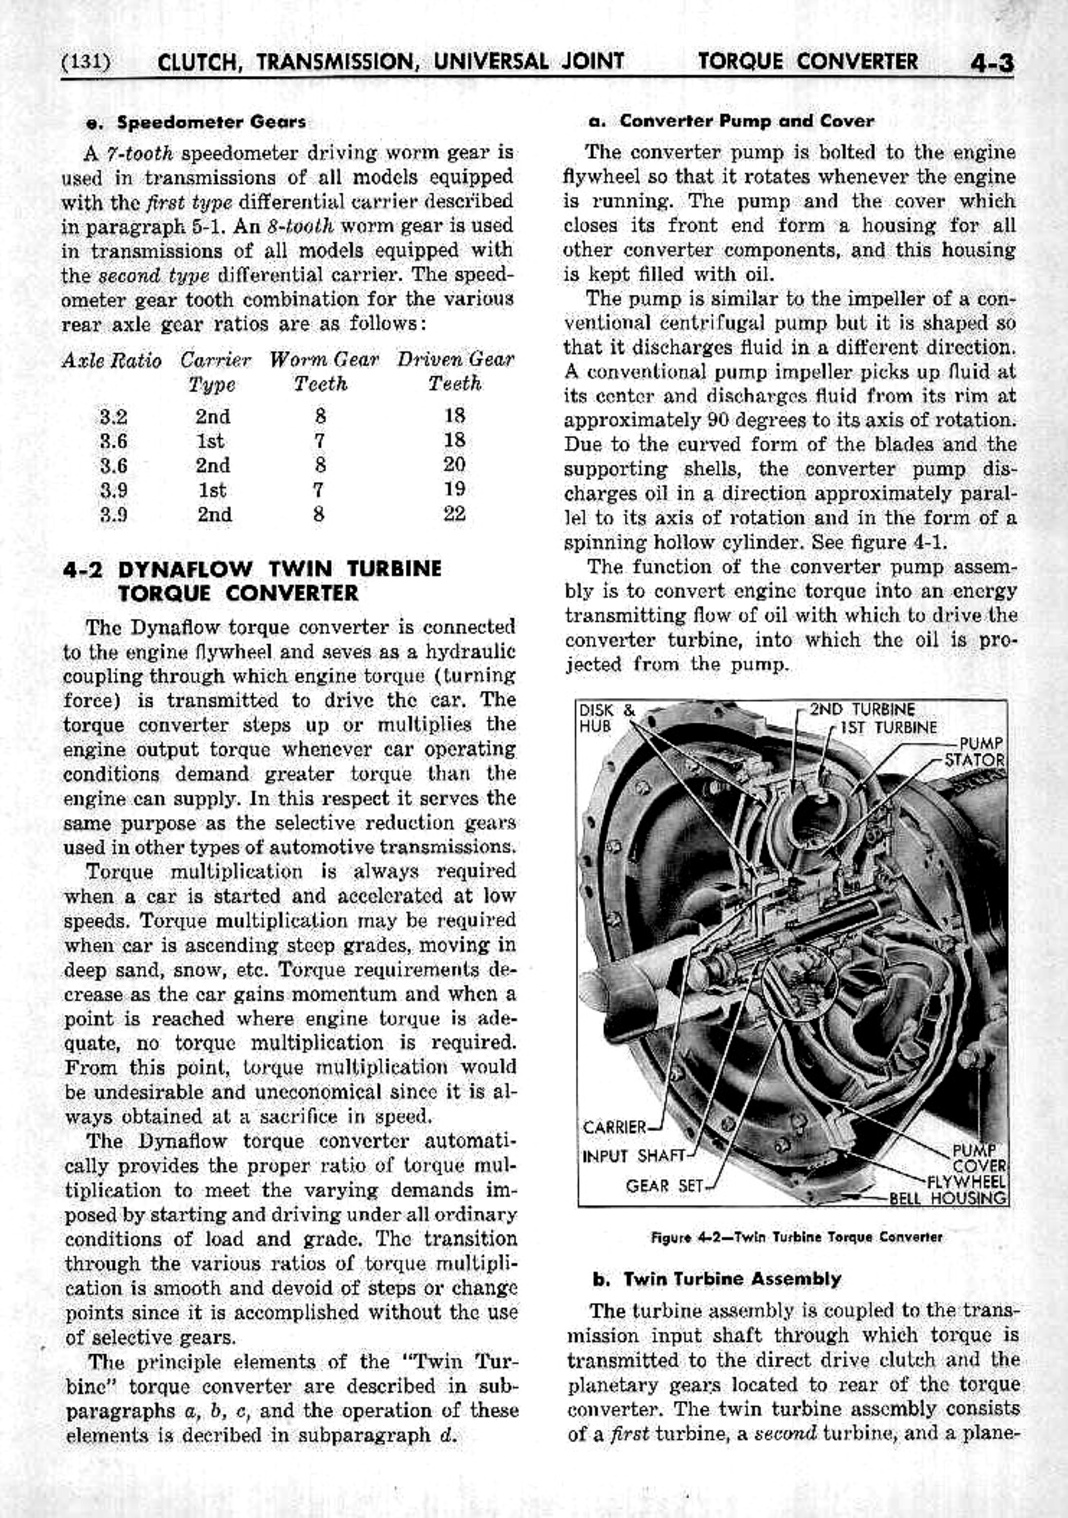 n_05 1953 Buick Shop Manual - Transmission-003-003.jpg